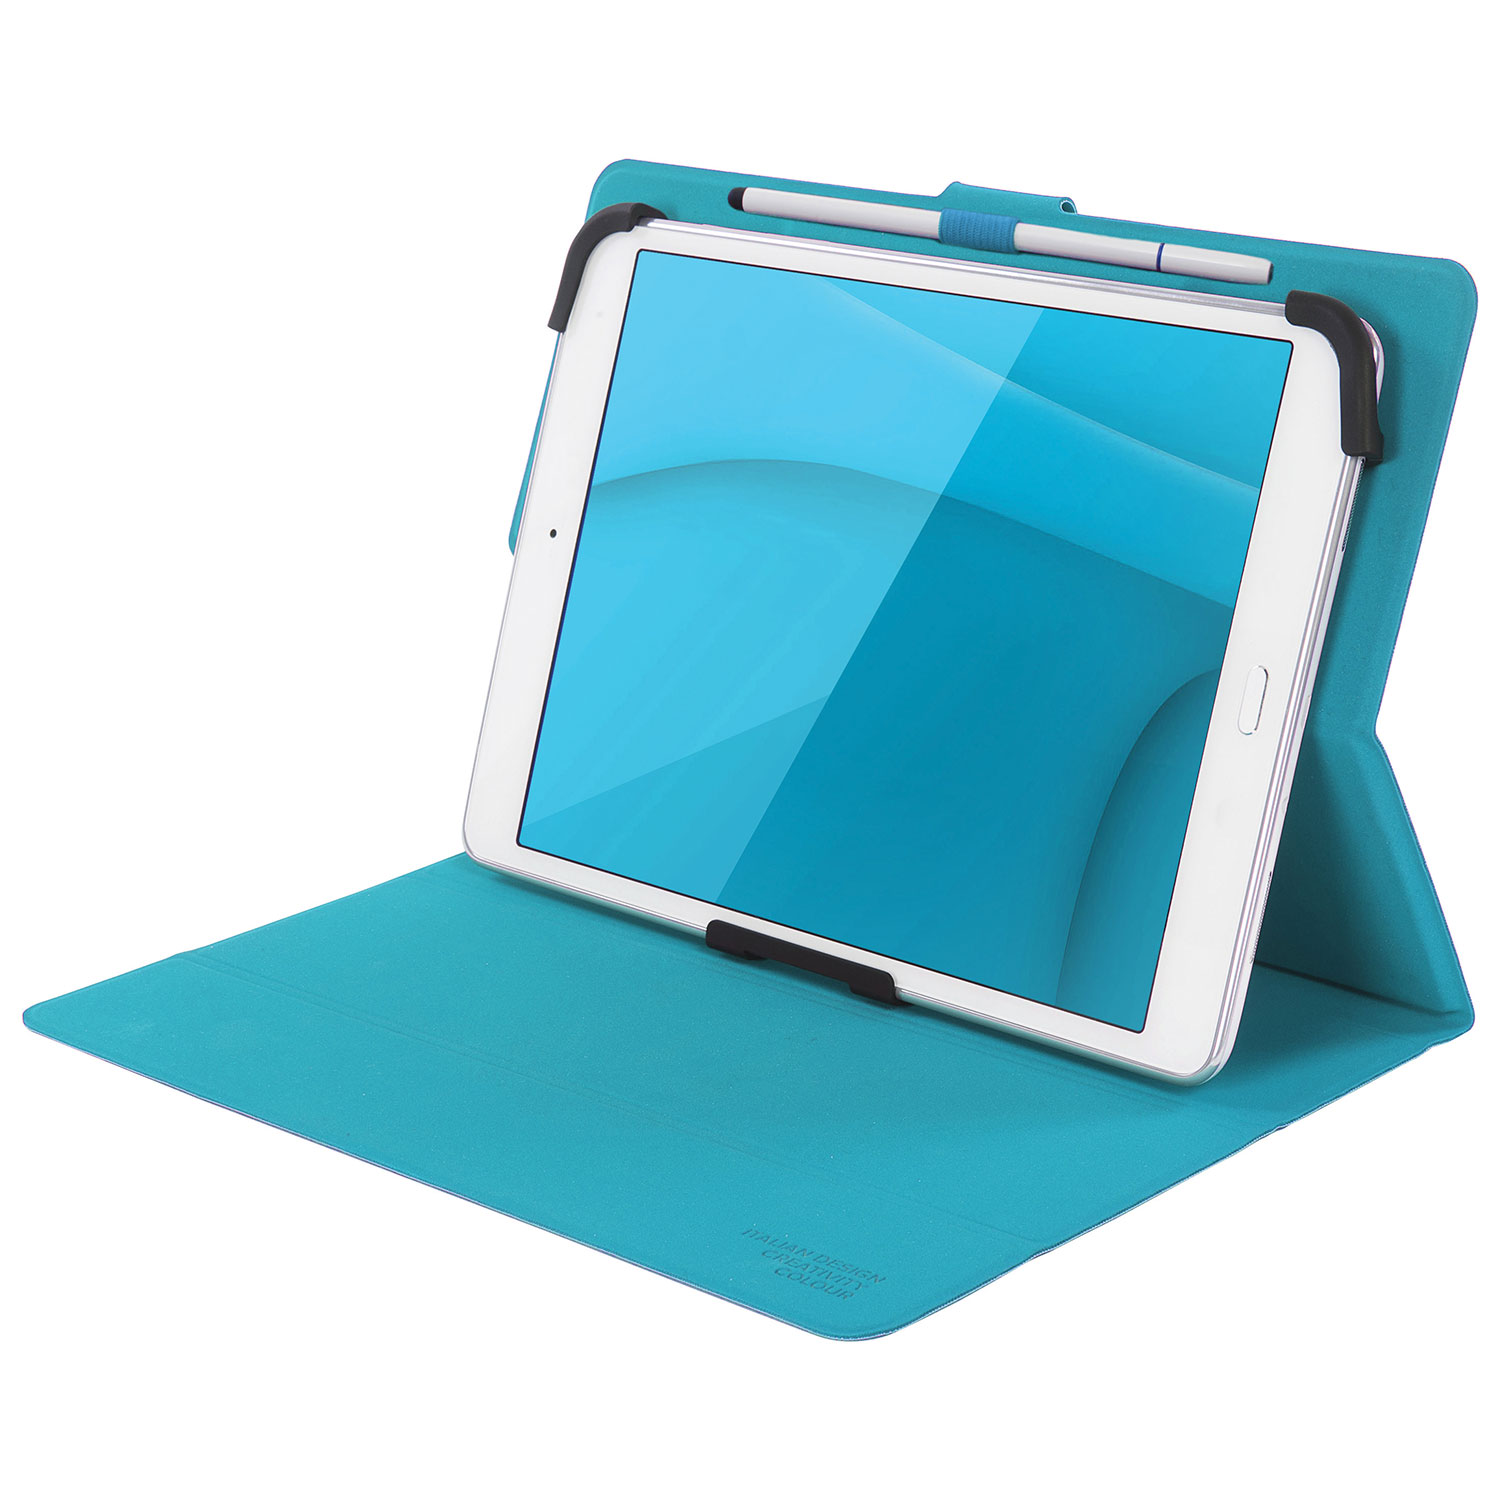 Tucano Milano Italy Facile Plus 10" Universal Tablet Folio Case - Sky Blue